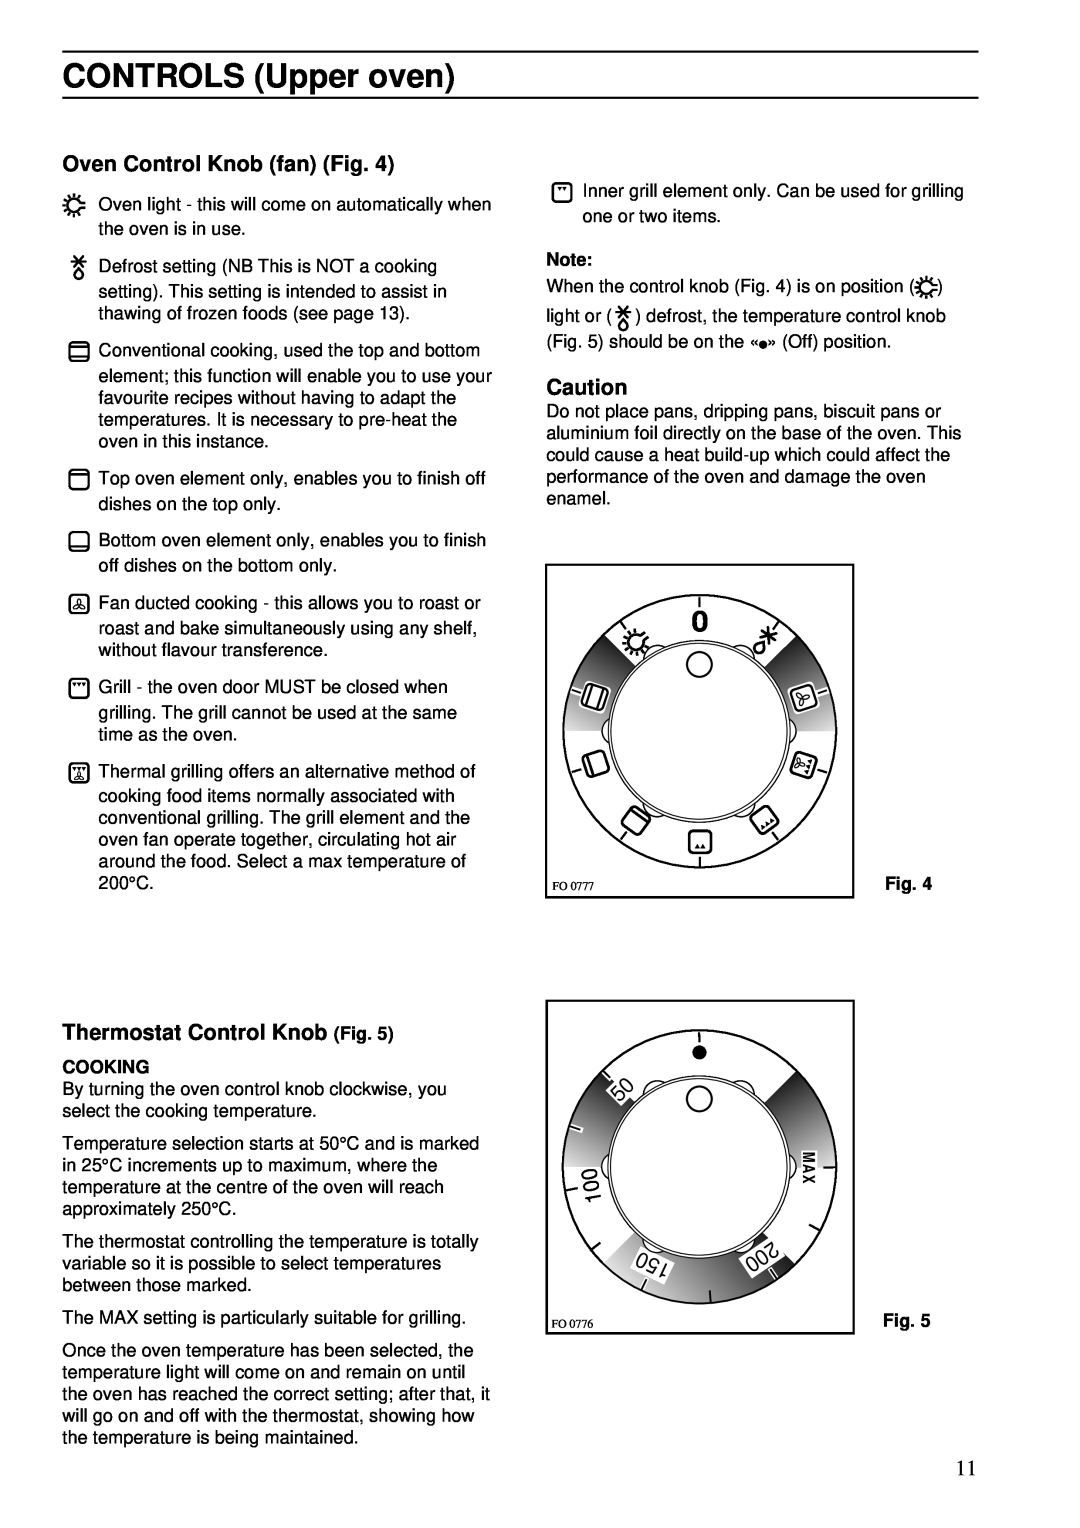 Zanussi ZDA 55 installation manual CONTROLS Upper oven, Oven Control Knob fan Fig, Thermostat Control Knob Fig 